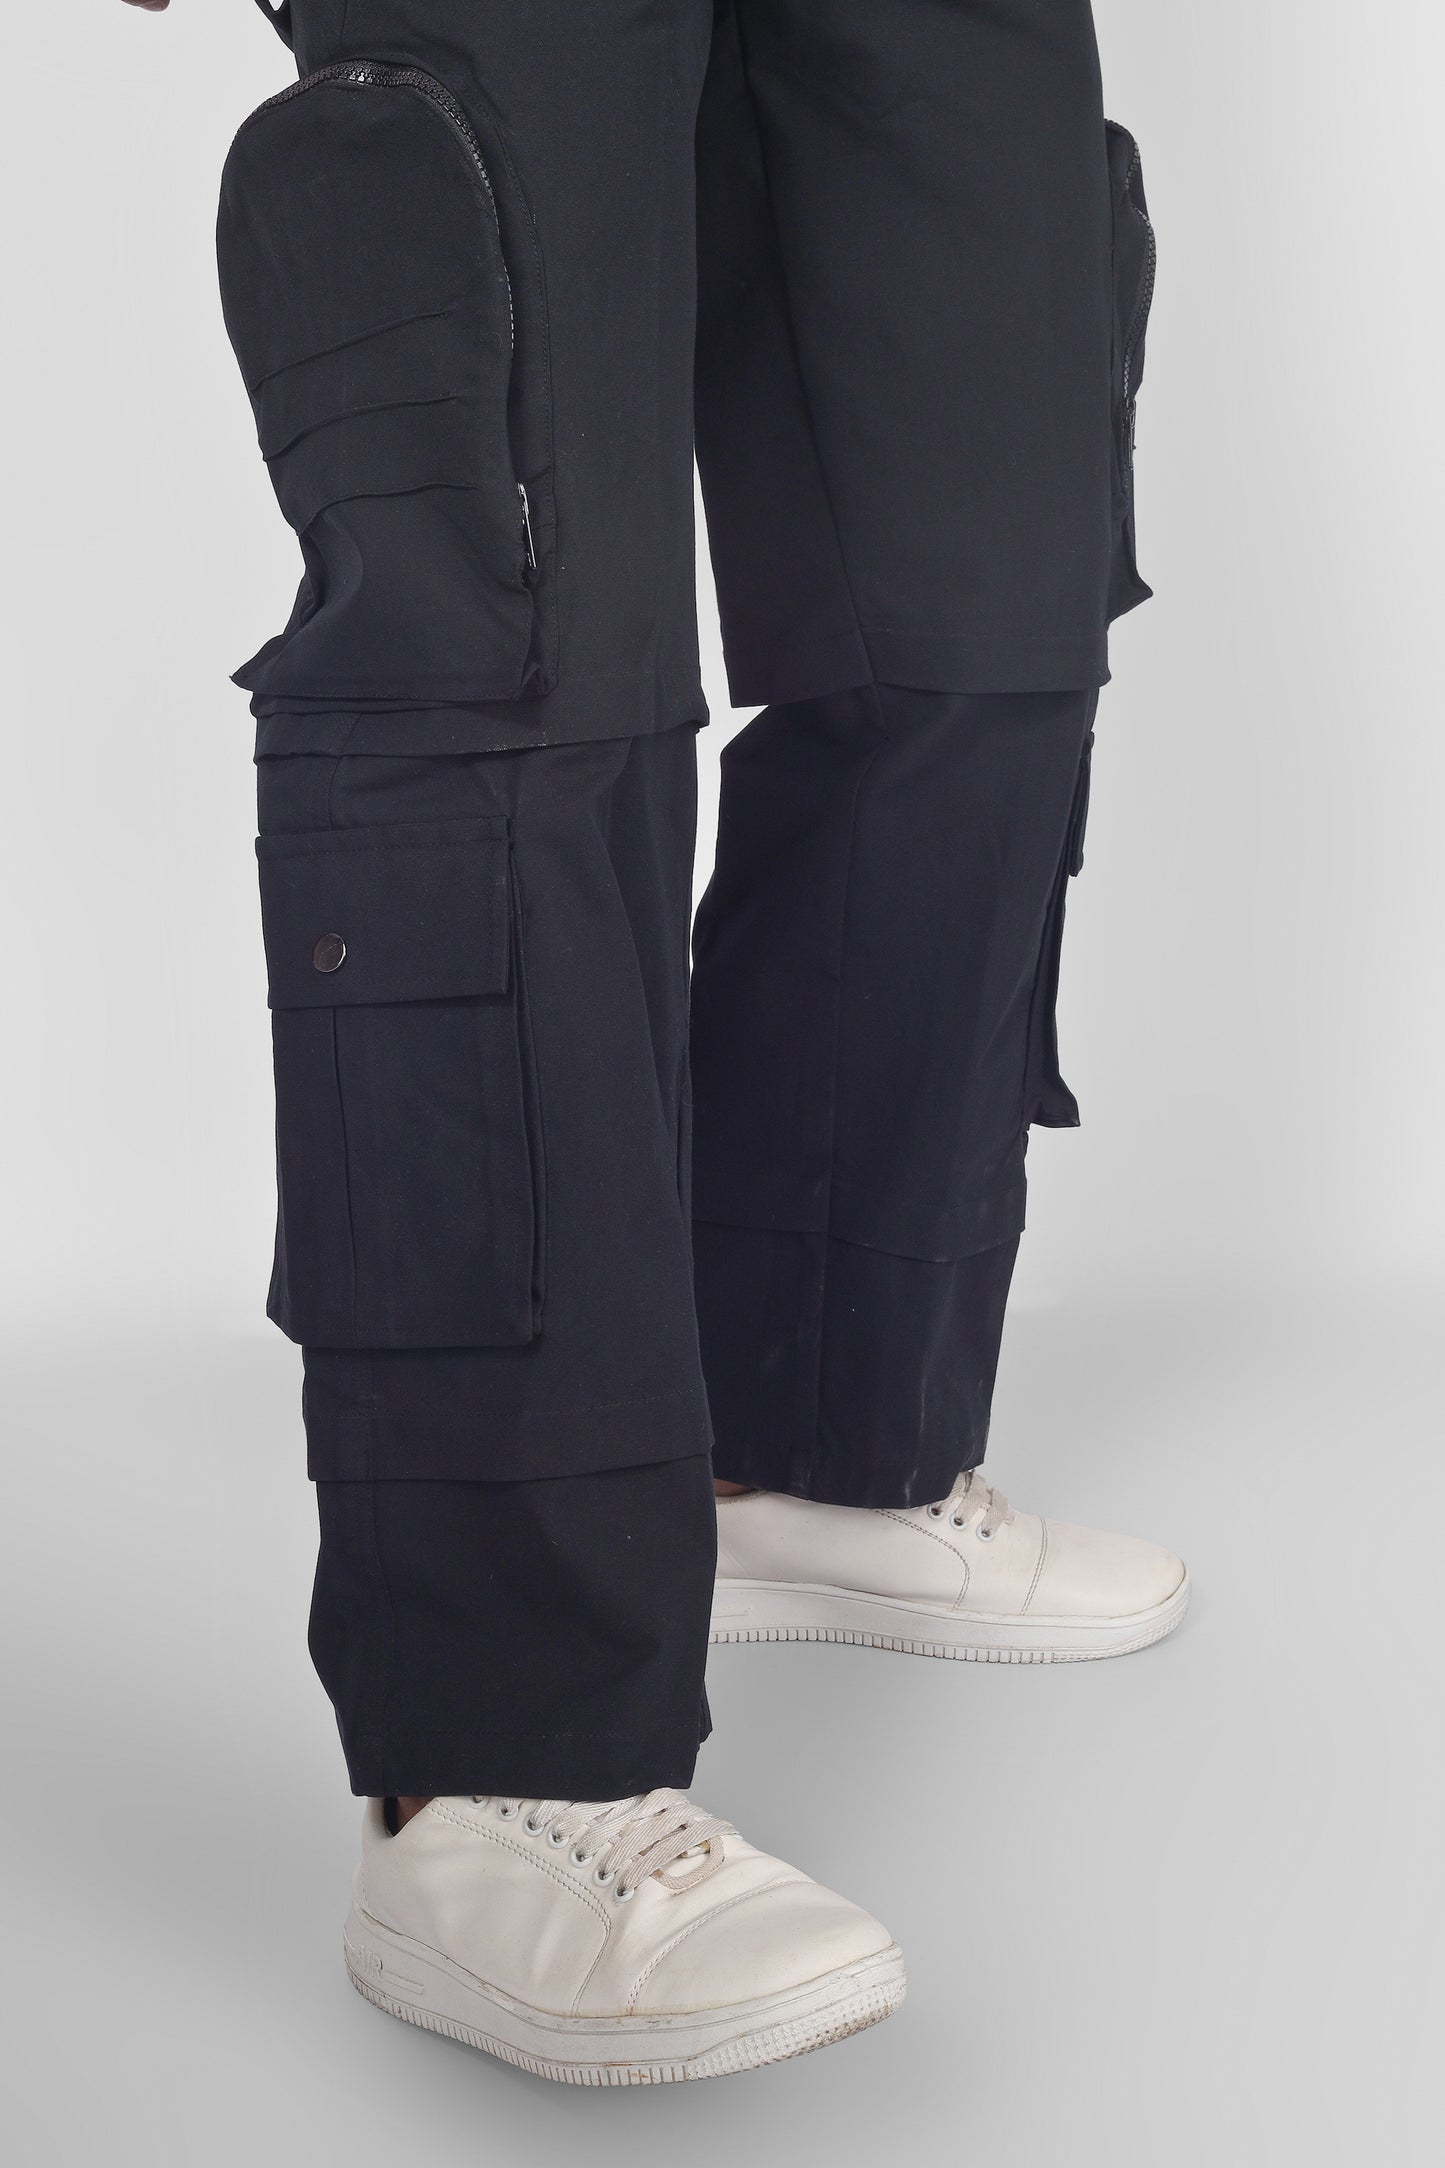 8 Pocket Cargo pant with zipper Patch Pocket (Black) - Wearduds